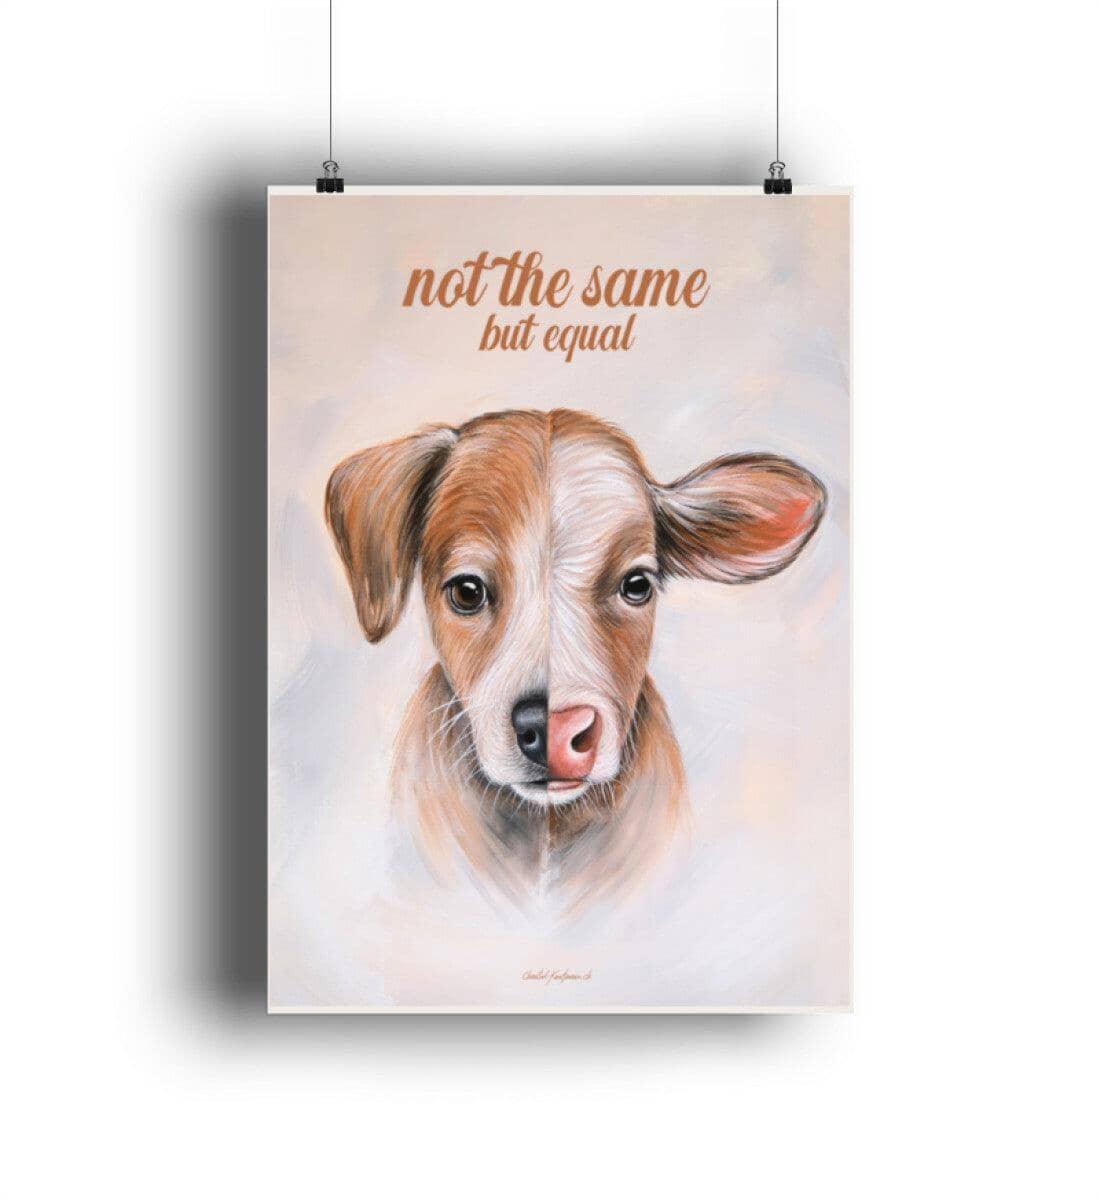 Not the same but equal [Chantal Kaufmann] - Poster - Team Vegan © vegan t shirt